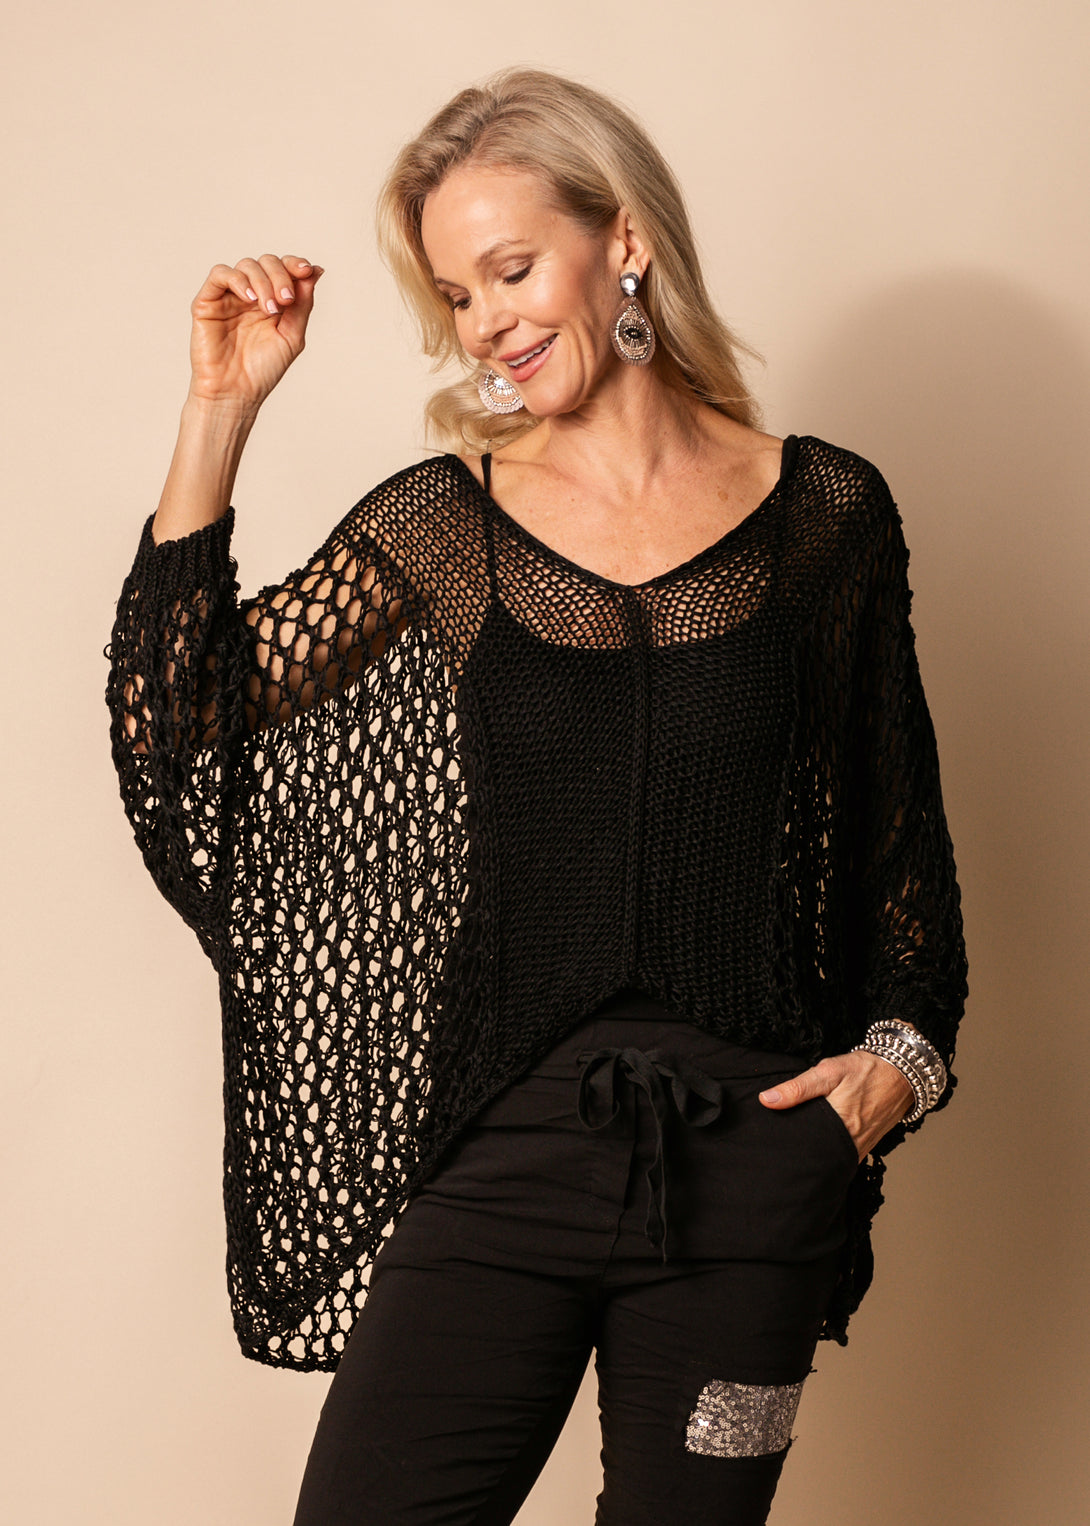 Ally Cotton Knit Top in Black - Imagine Fashion